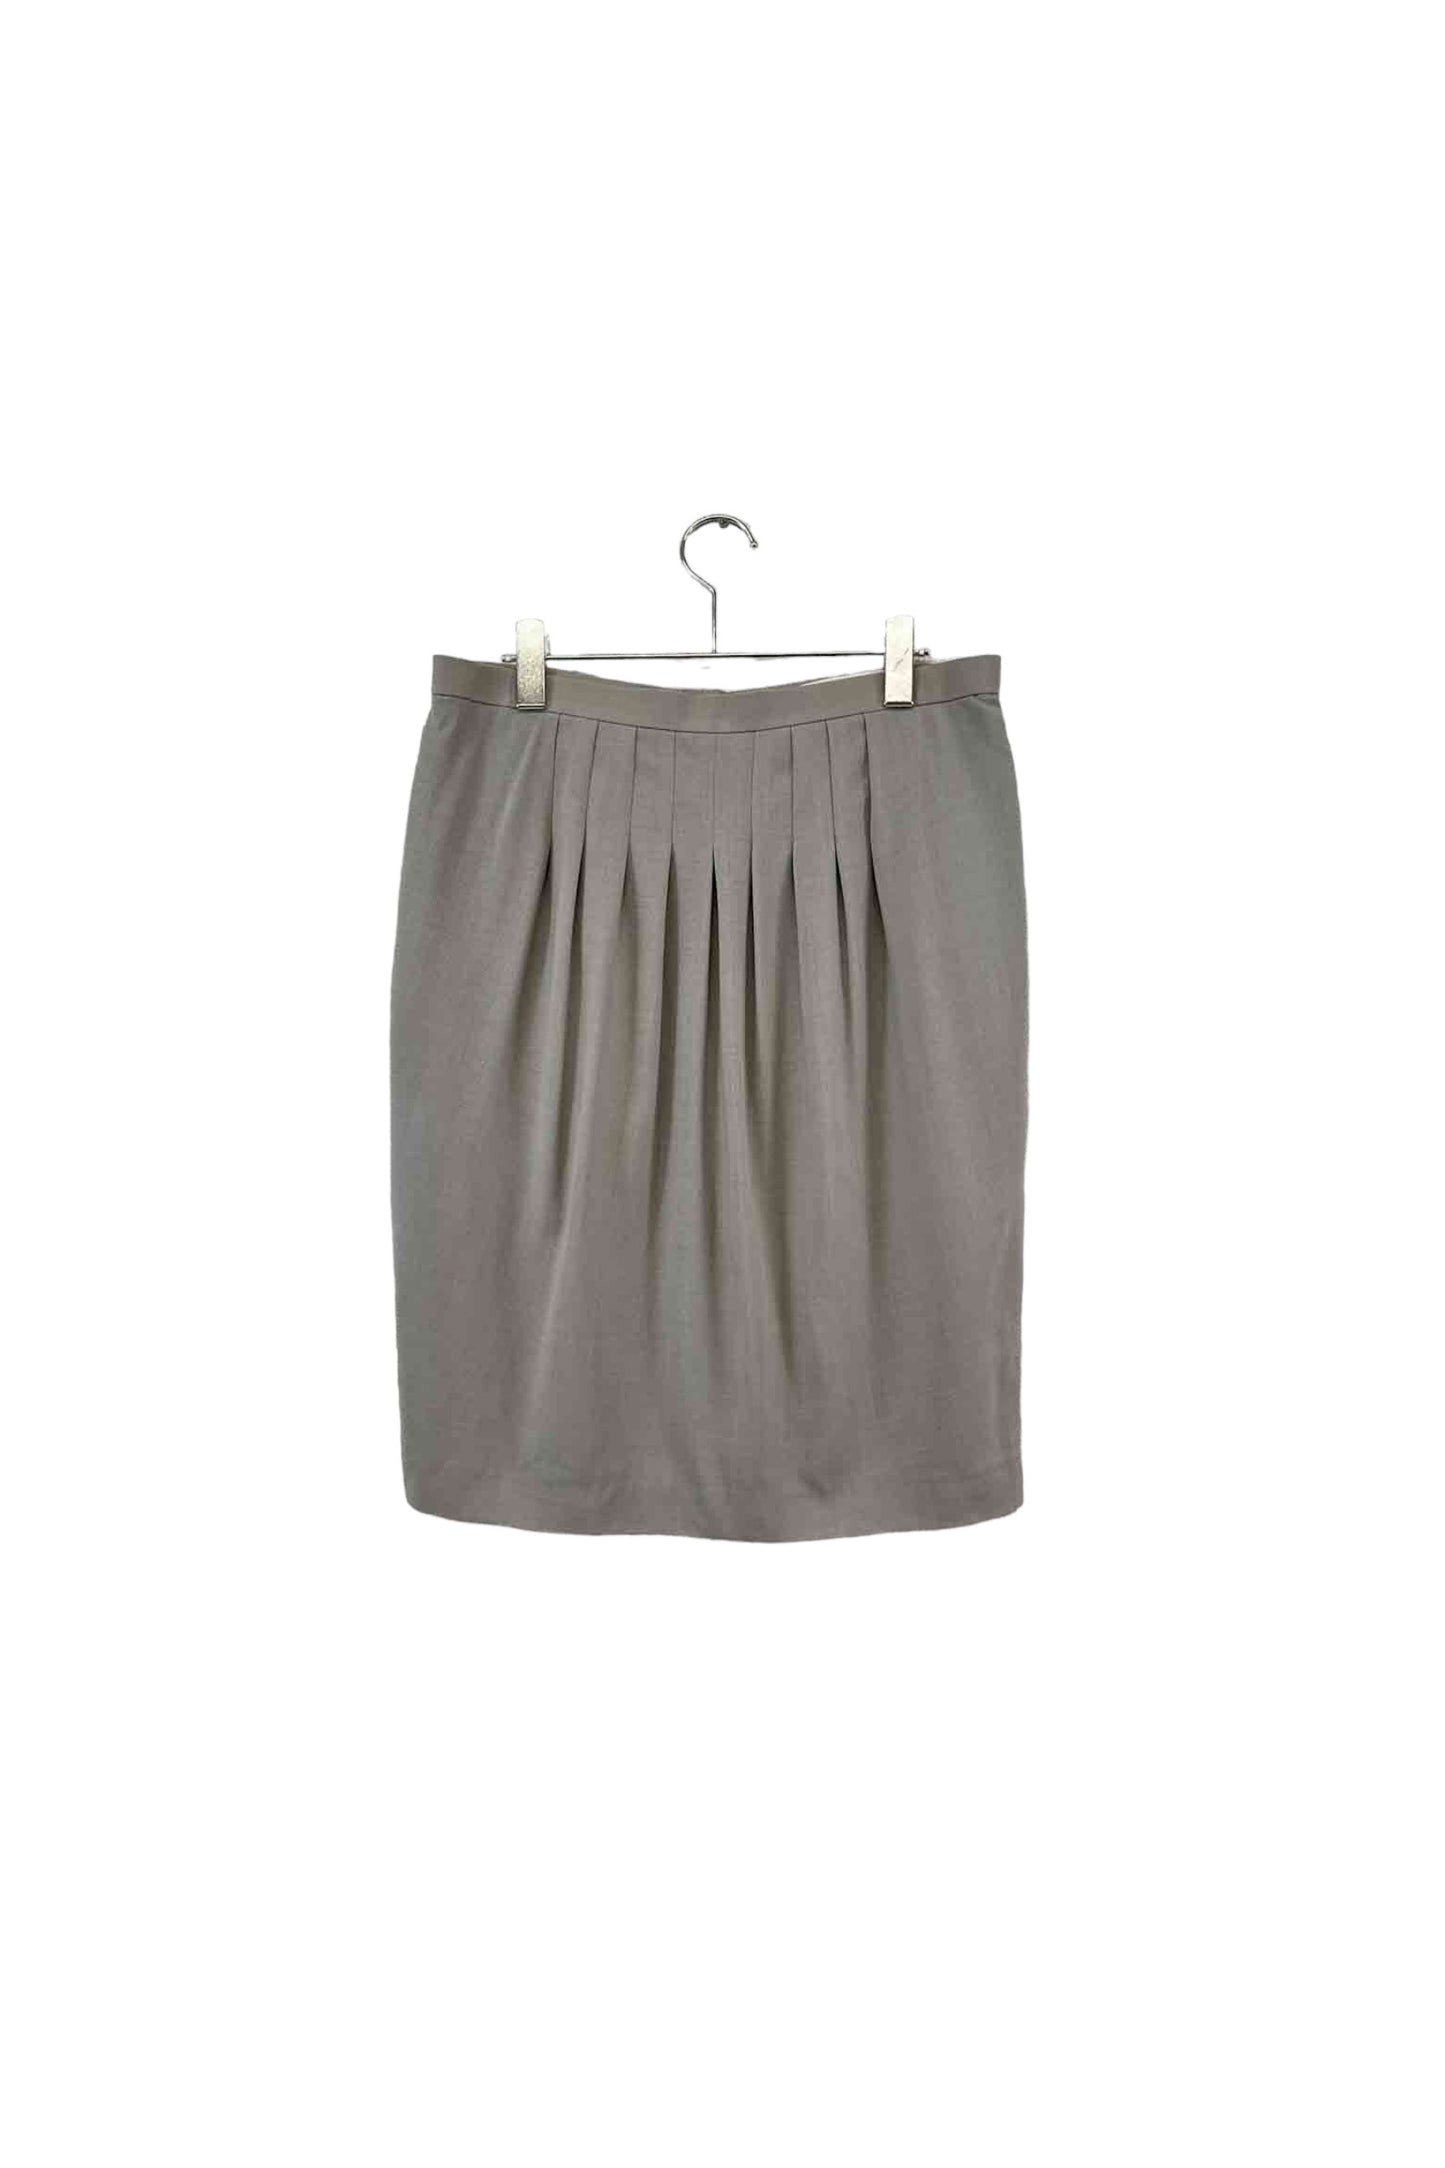 Chloe gray pleated skirt